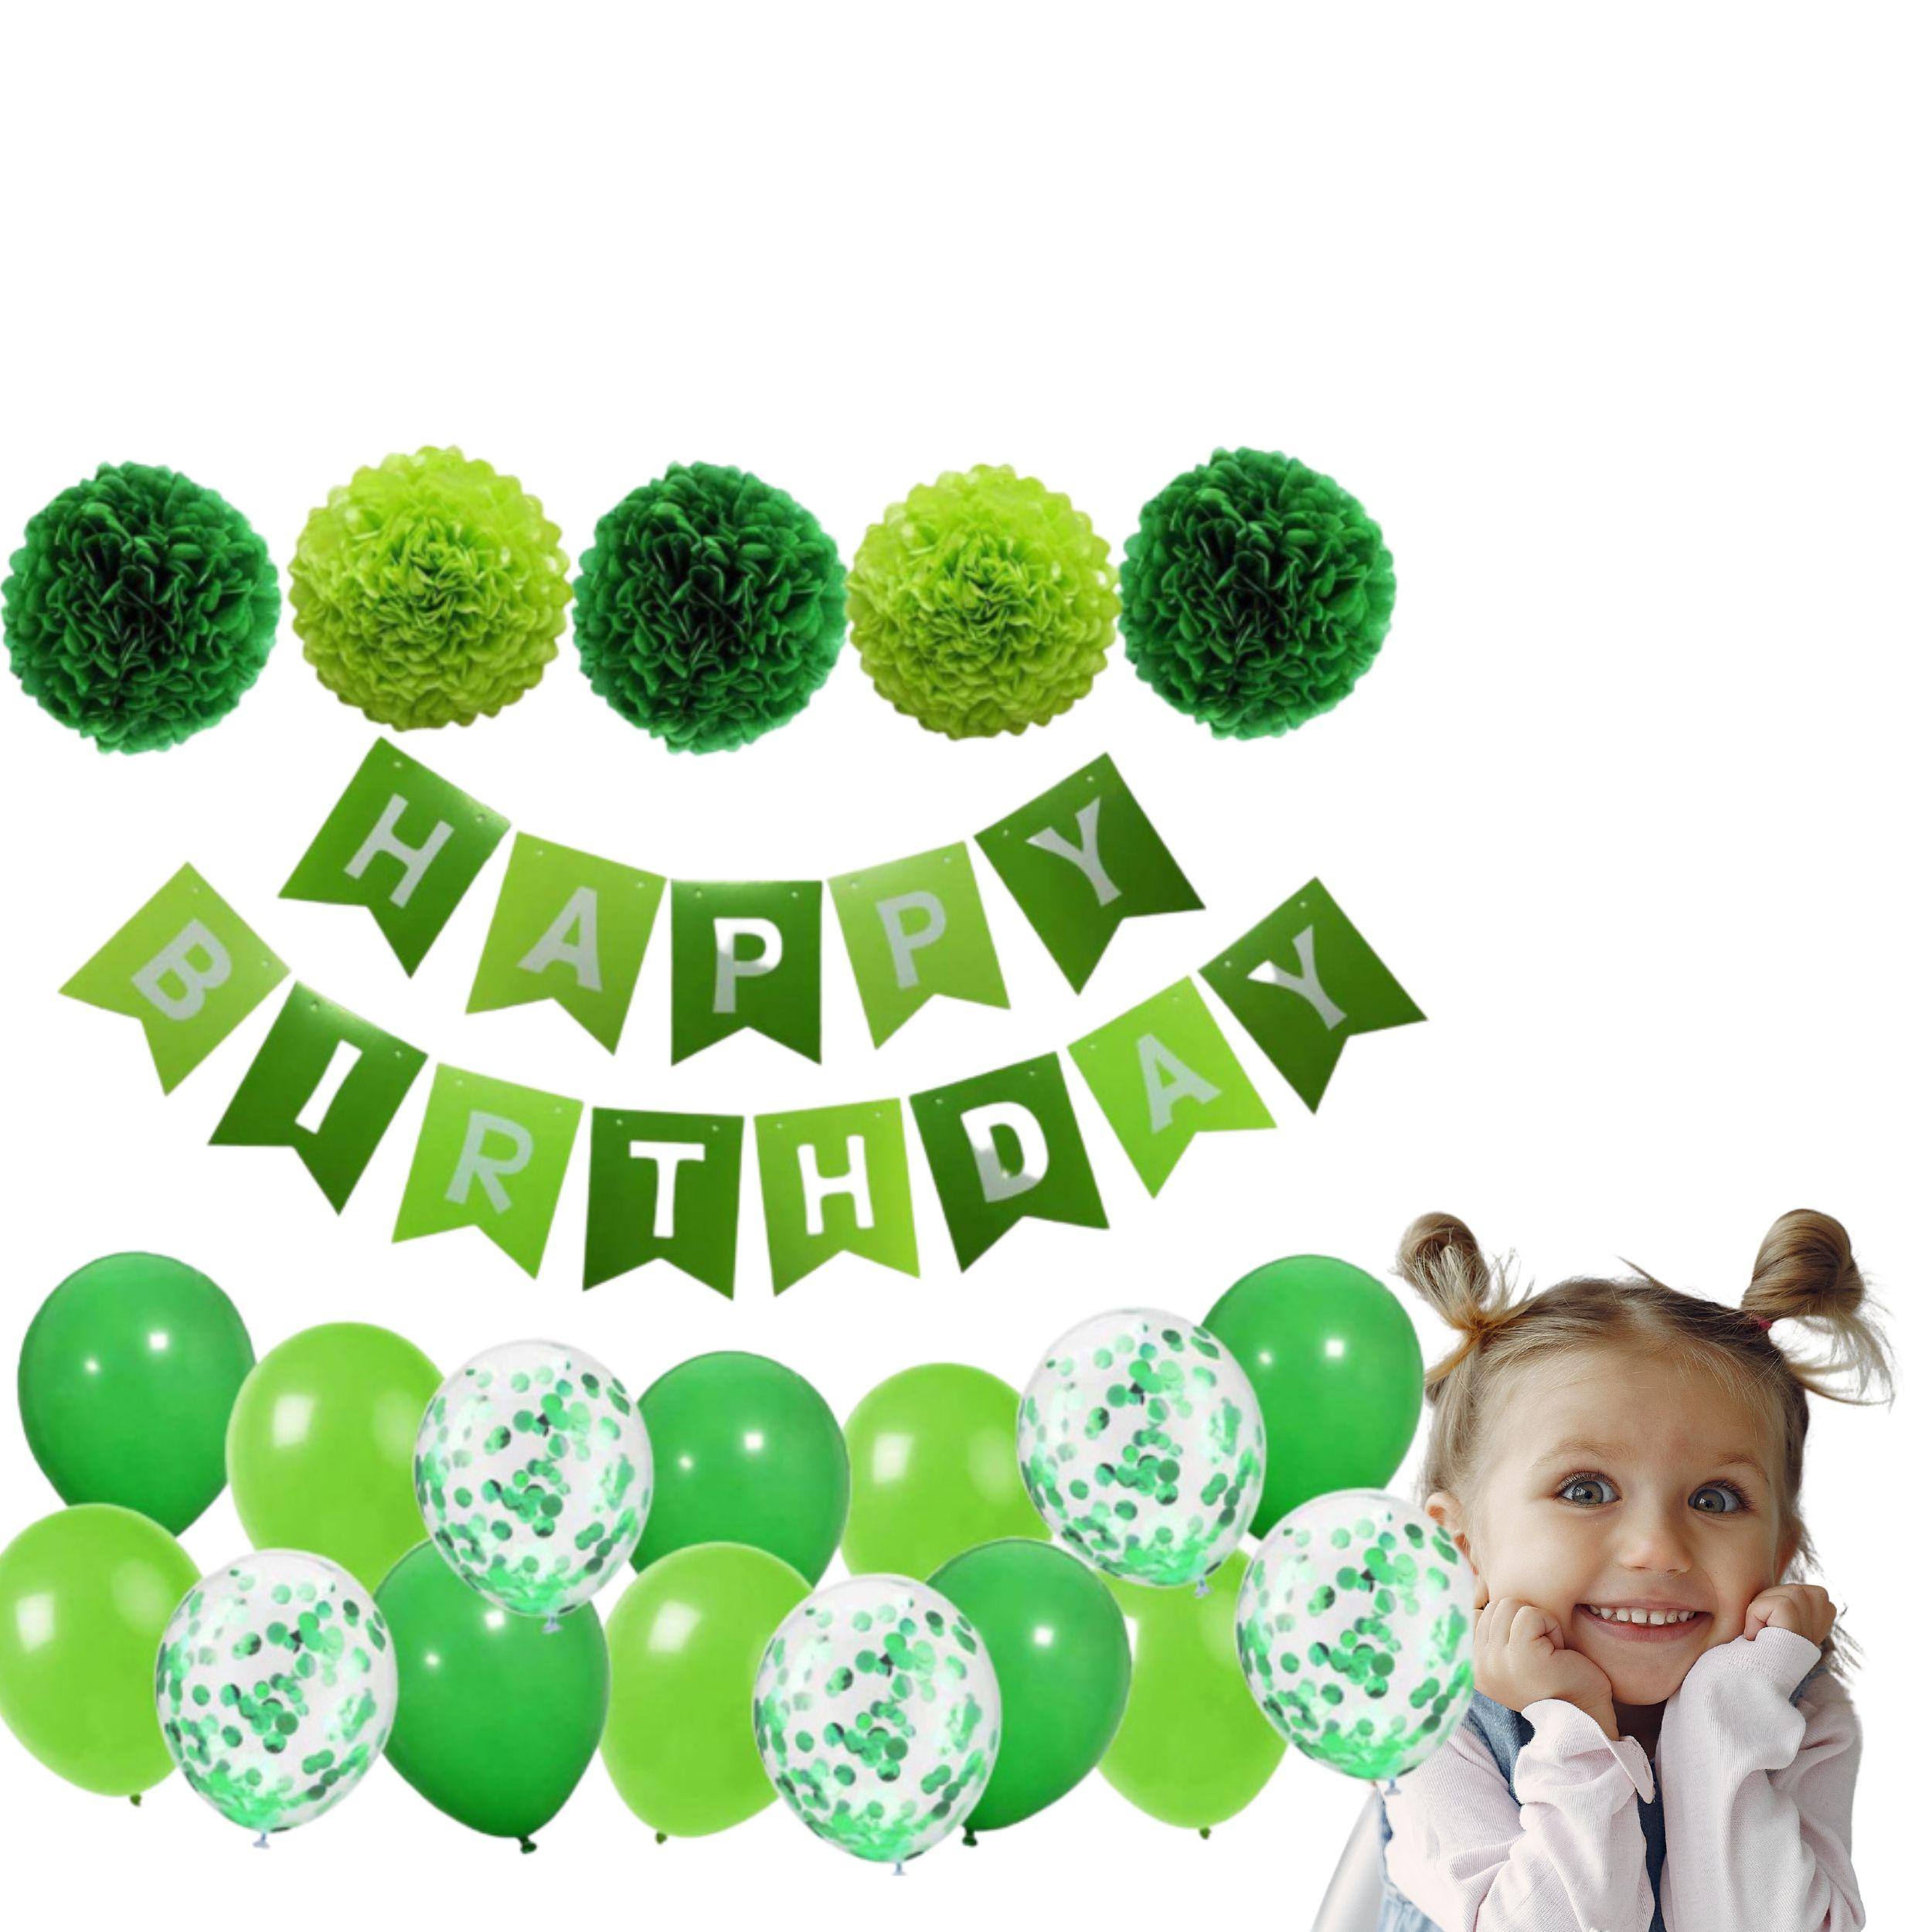 Birthday decoration for boy's - green